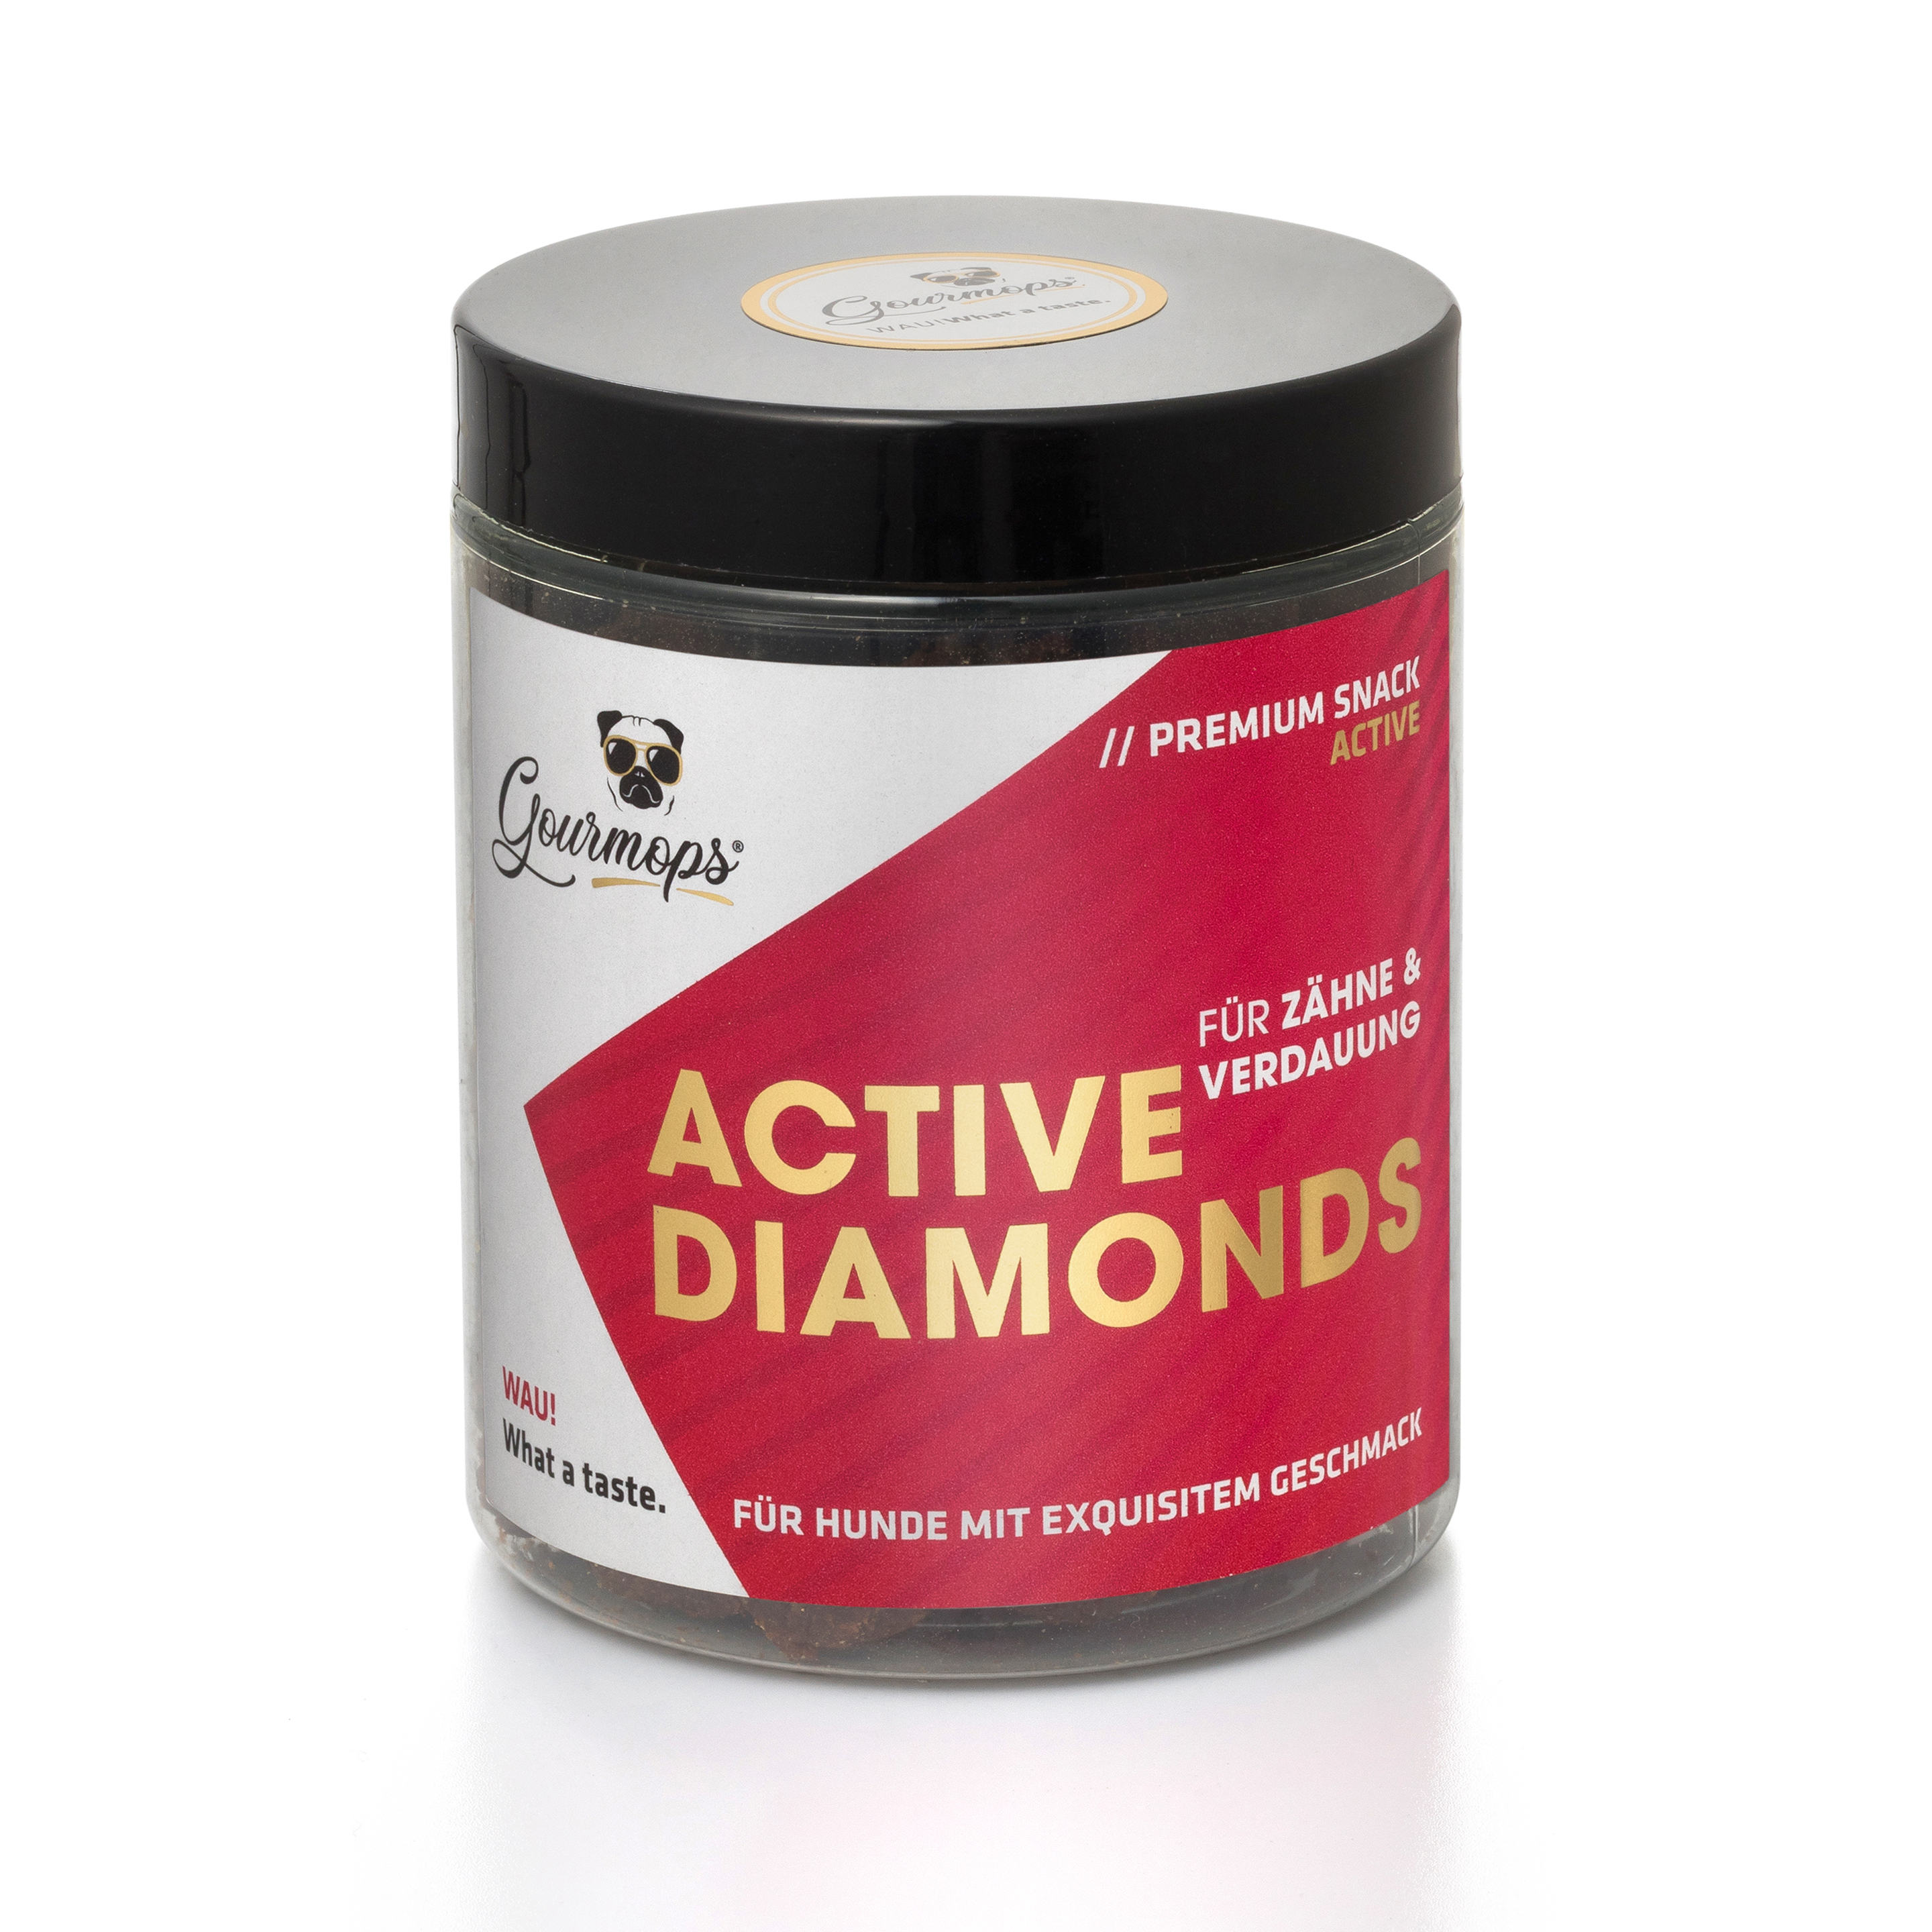 Dose Active Diamonds Verdauung mit Deckel